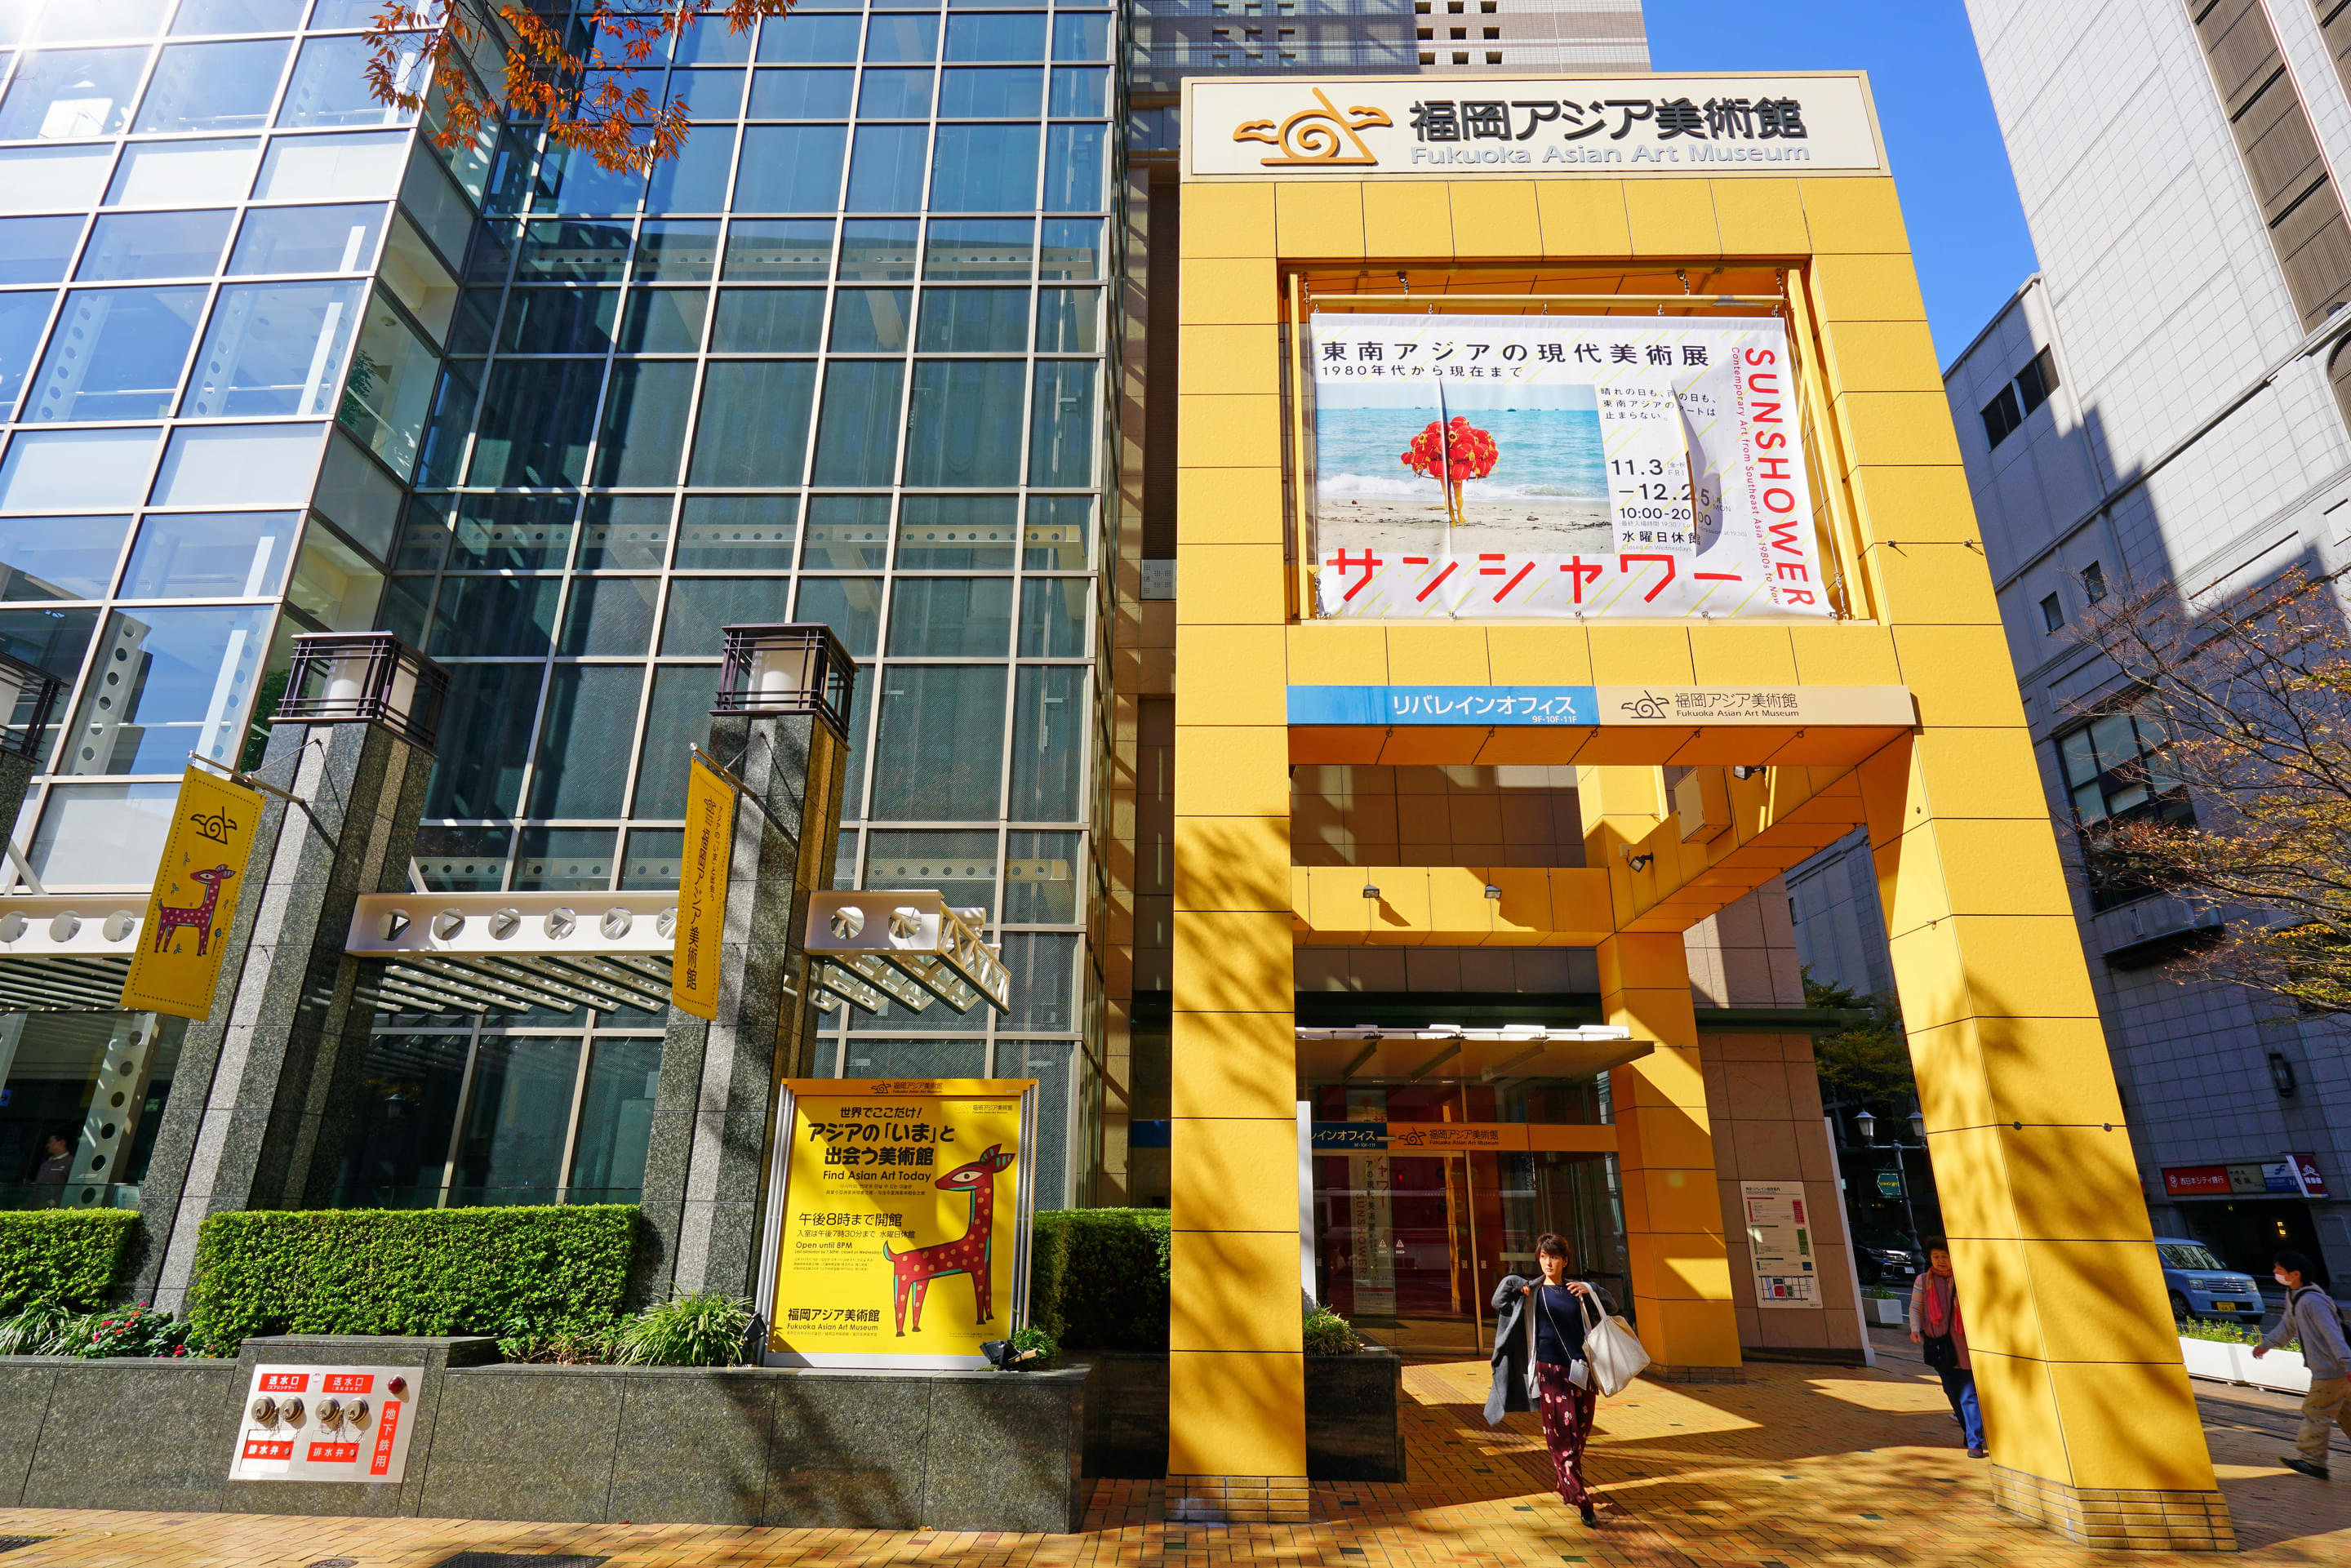 Fukuoka Art Museum Overview